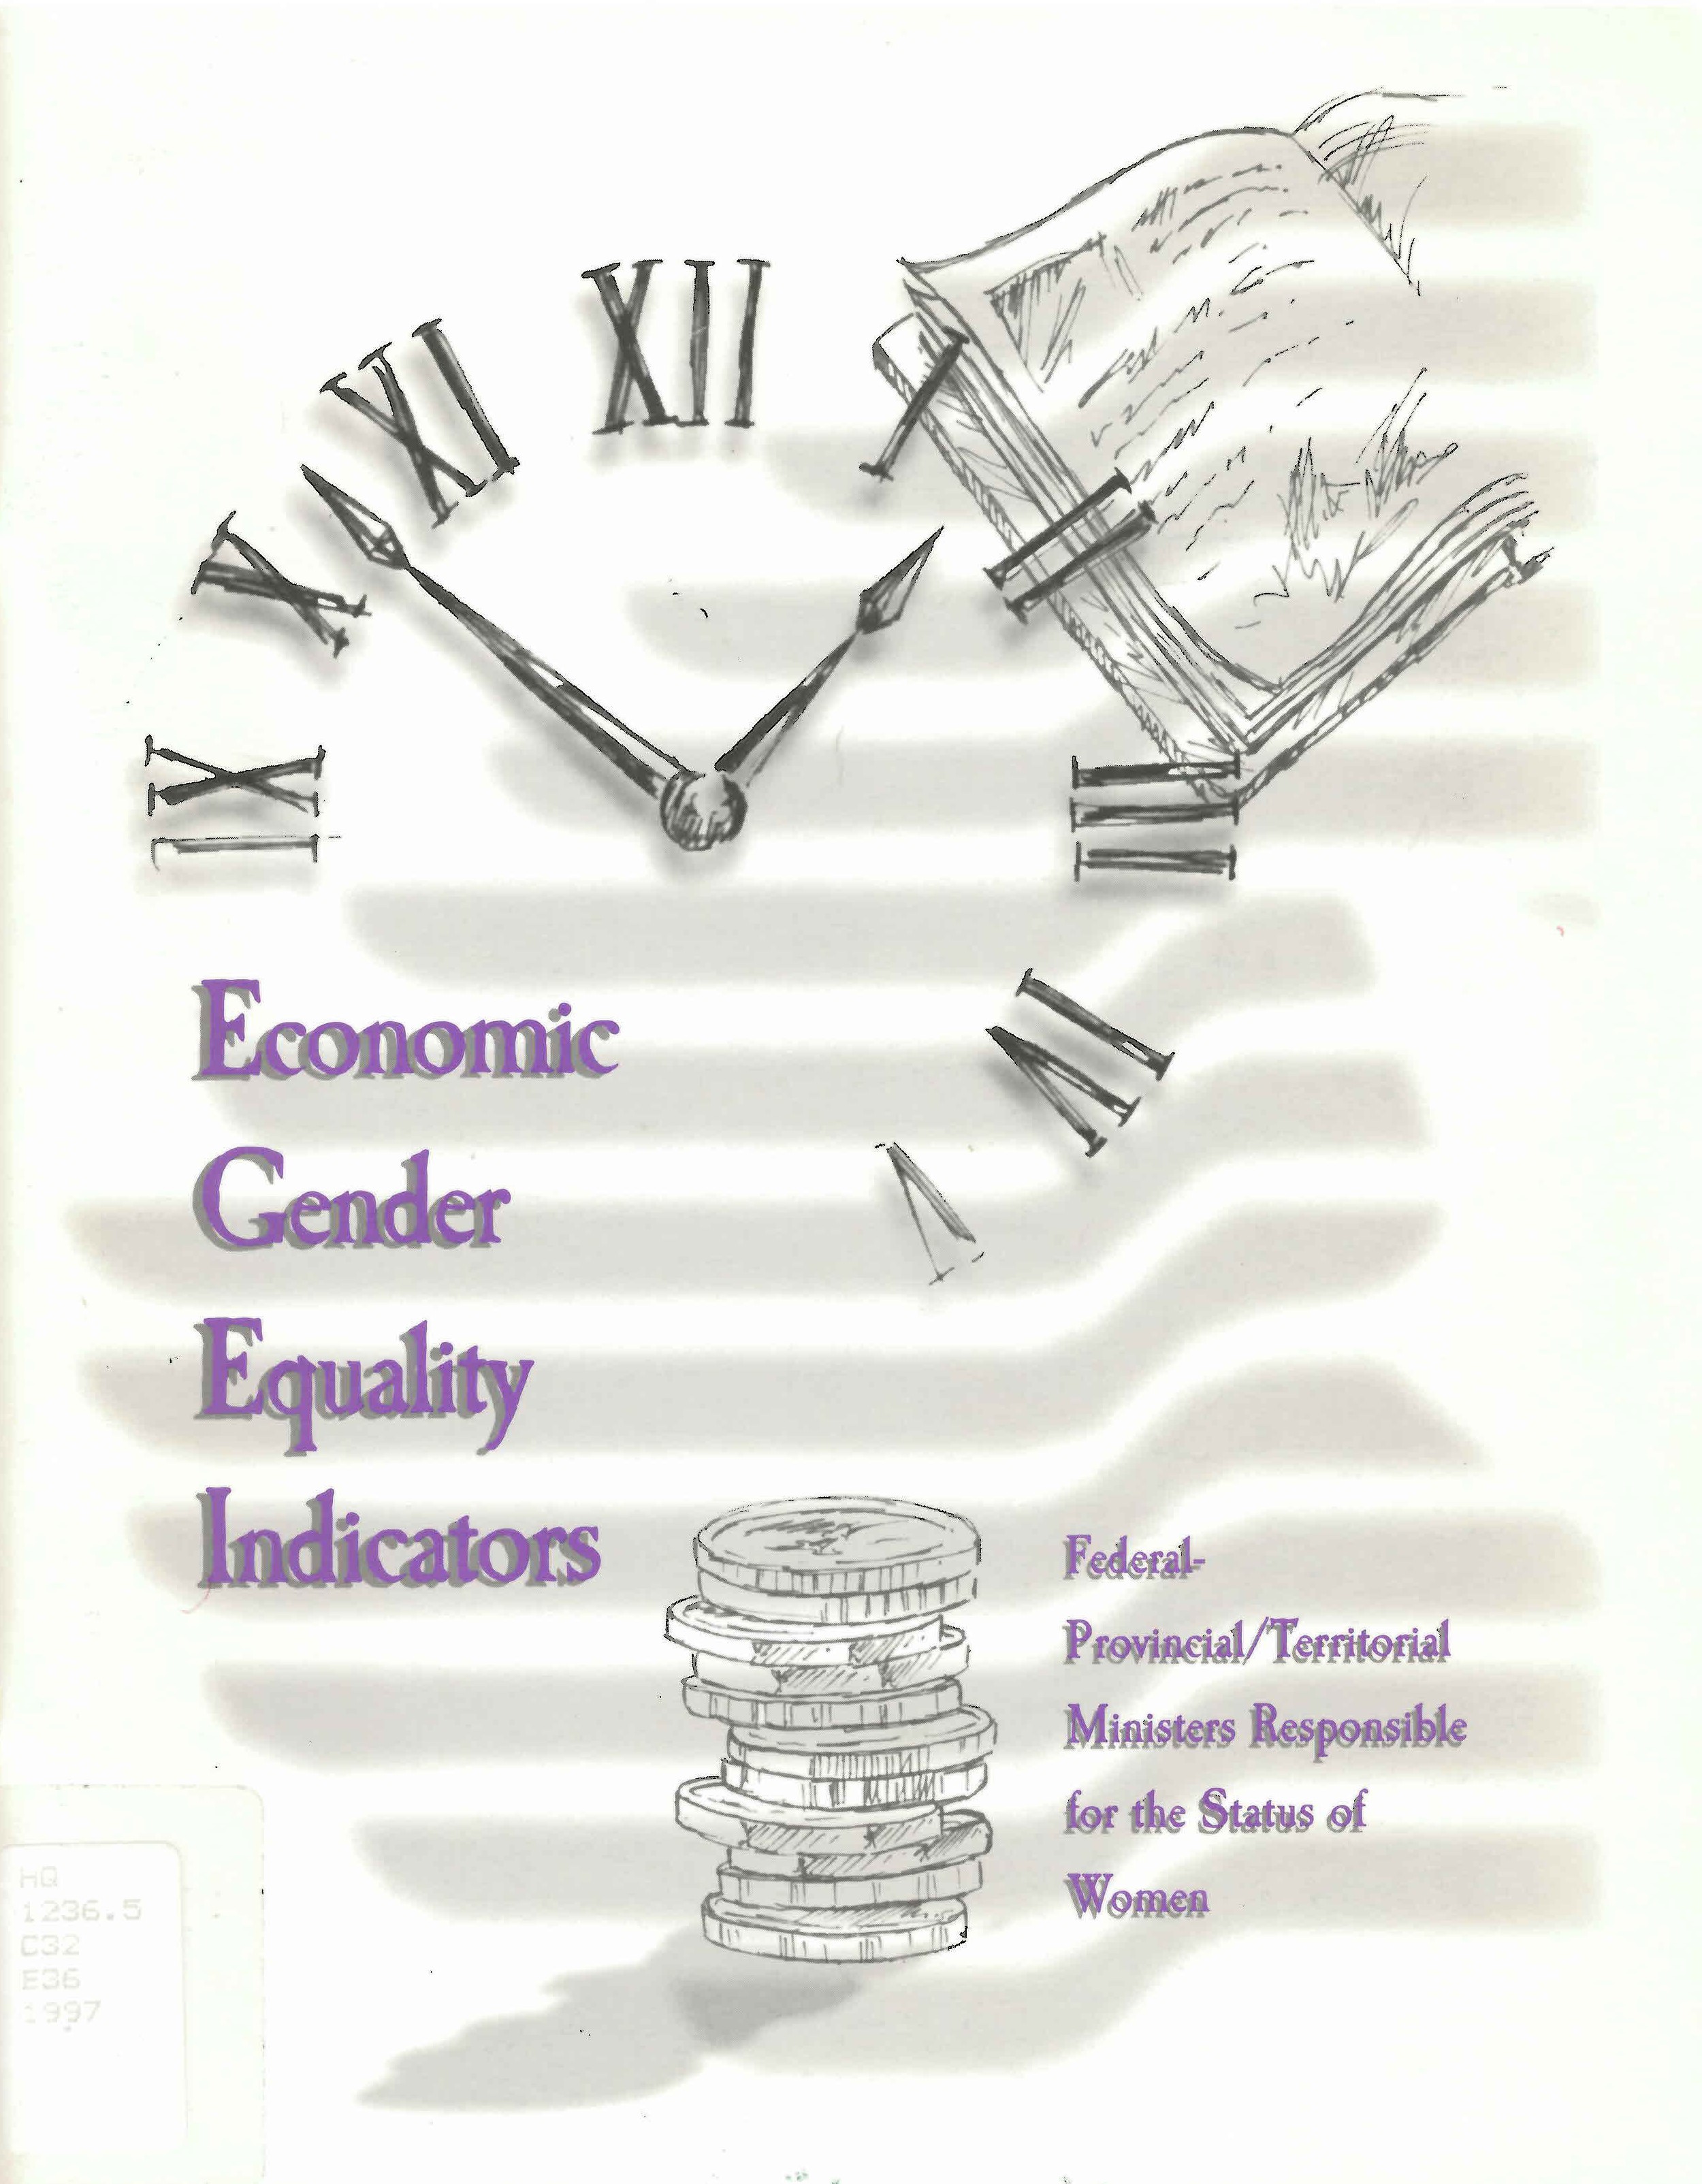 Economic gender equality indicators.